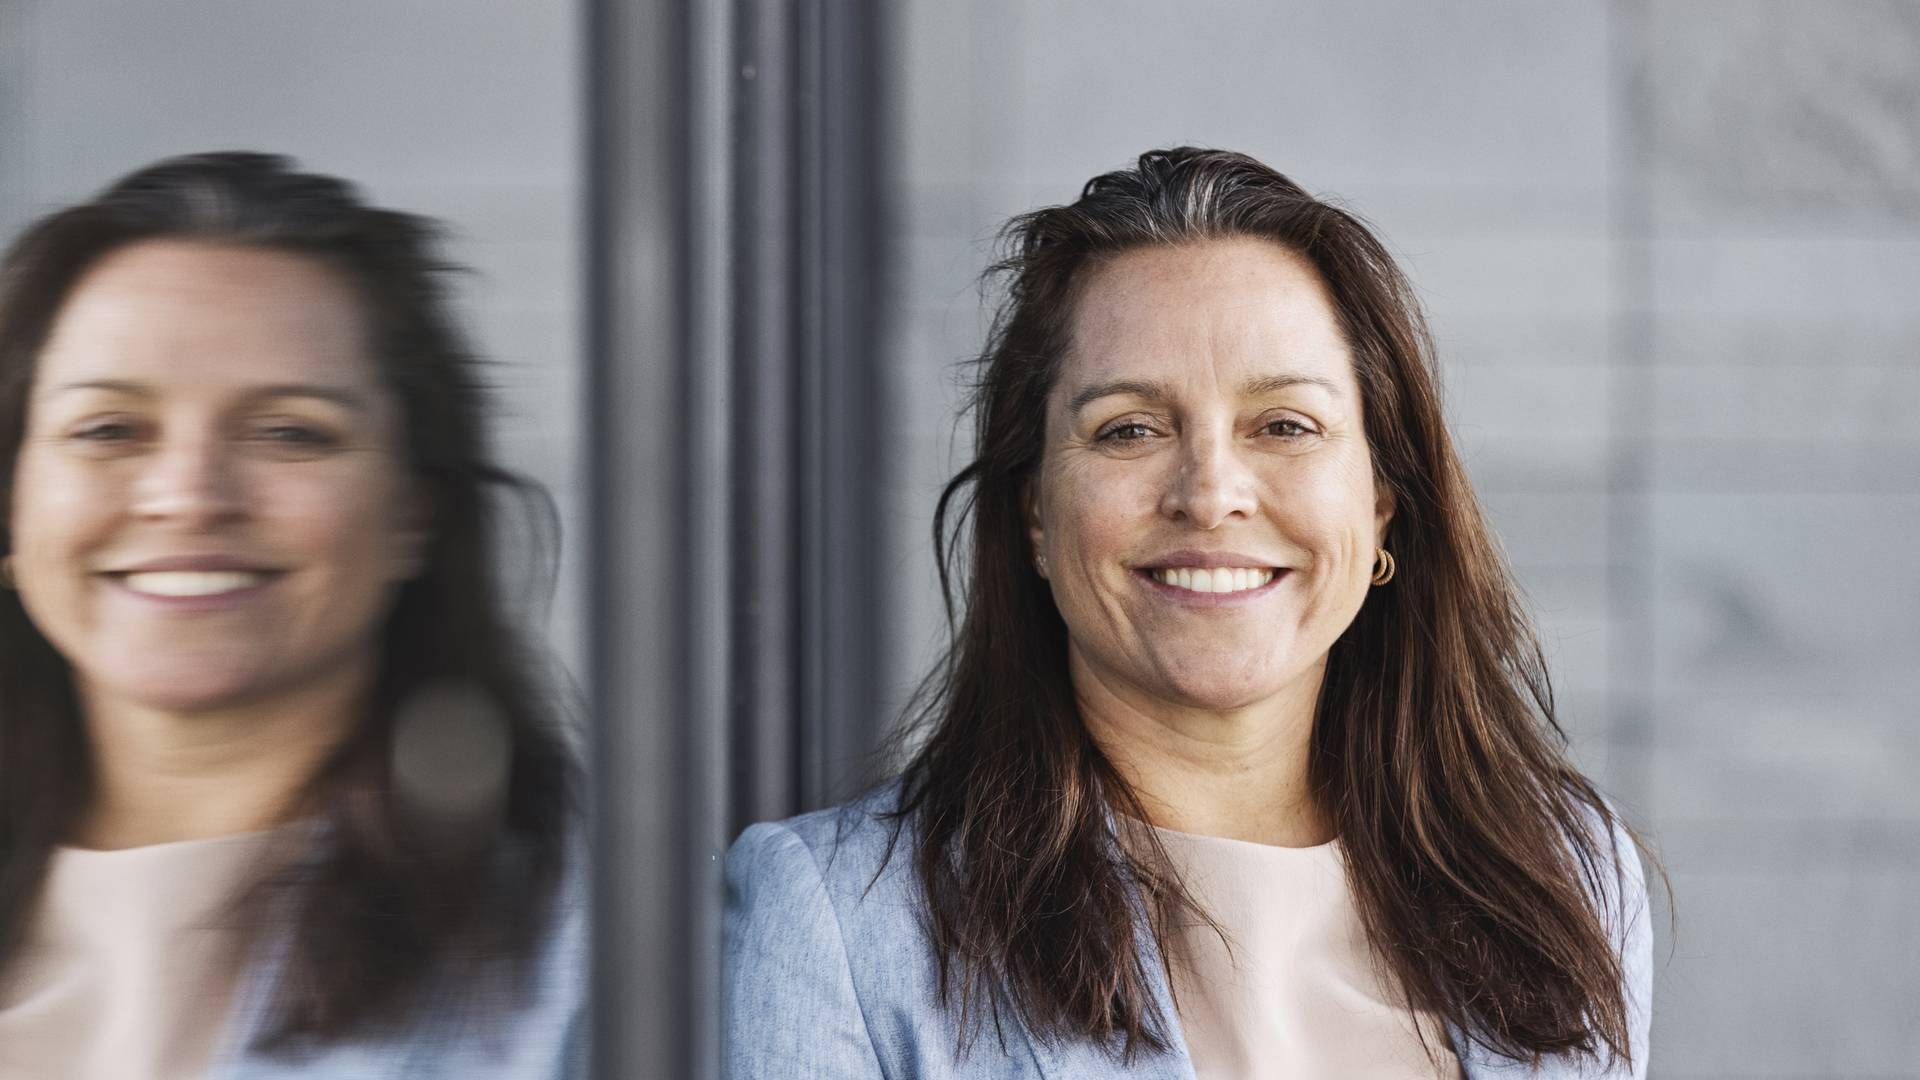 Helene Bløcher er bankdirektør i Nordea med ansvar for danske erhvervskunder. | Foto: PR / Nordea